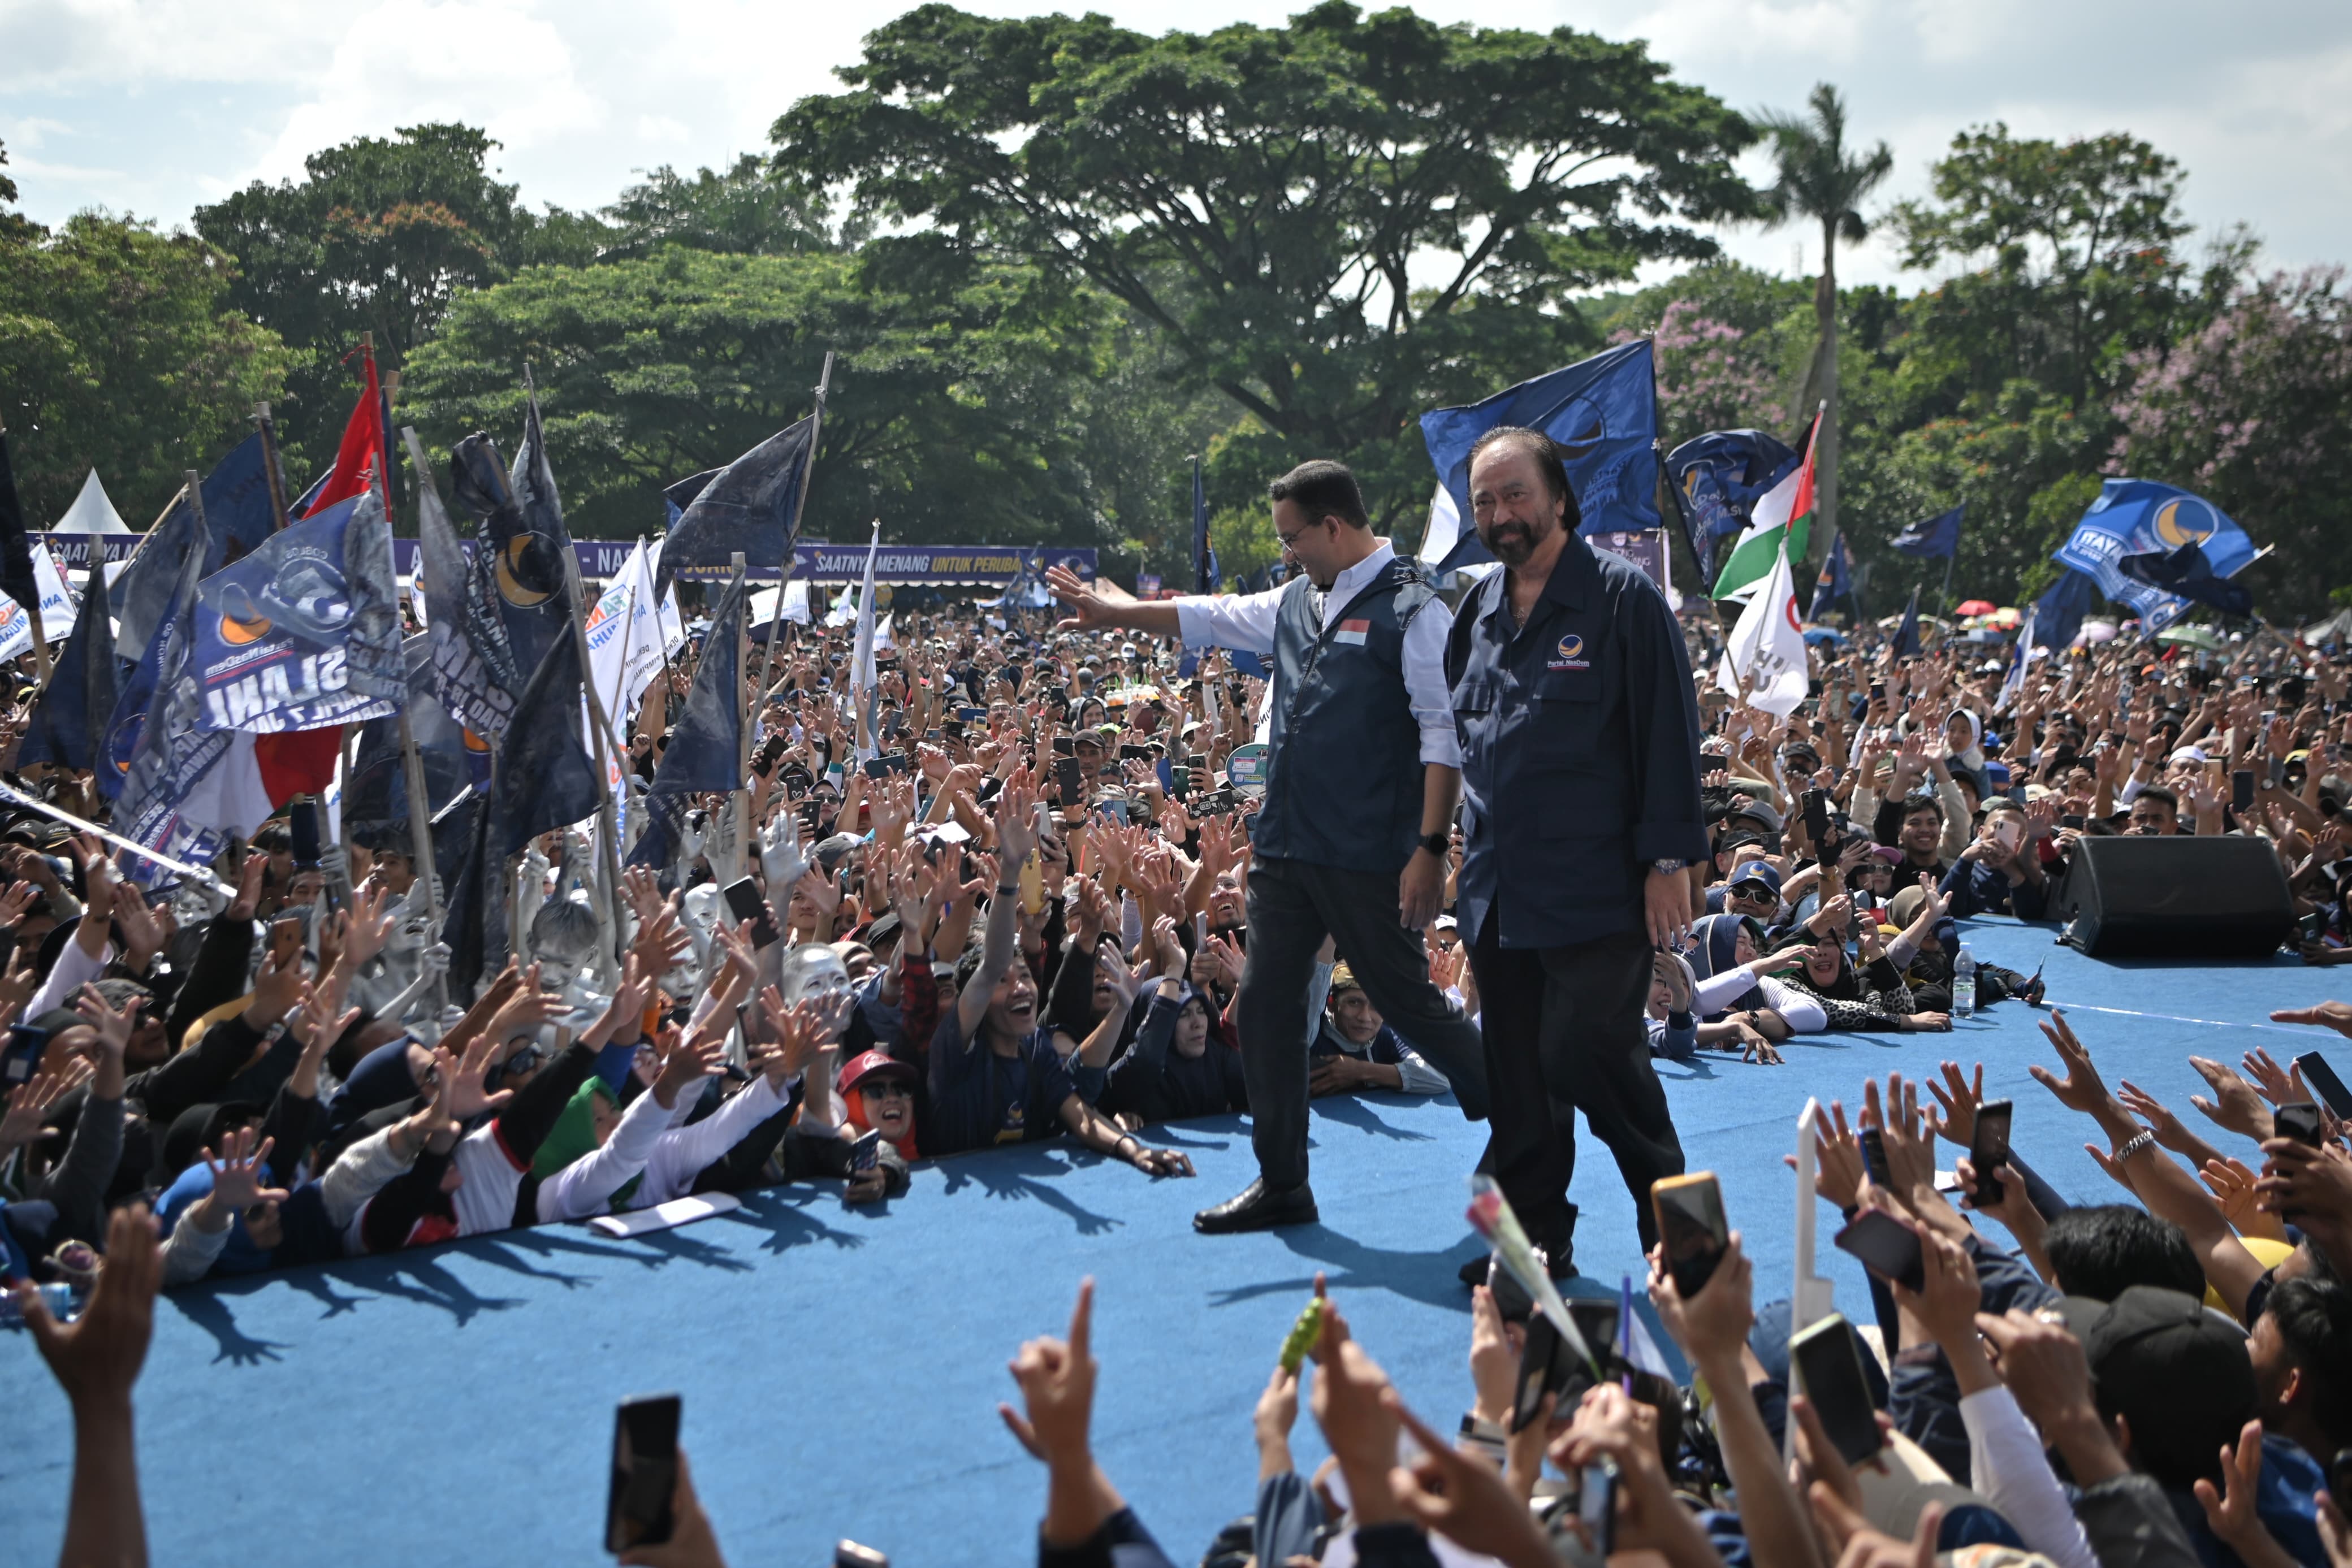 Kampanye Akbar di Bandung, NasDem Jabar: Momentum Merebut Kemenangan